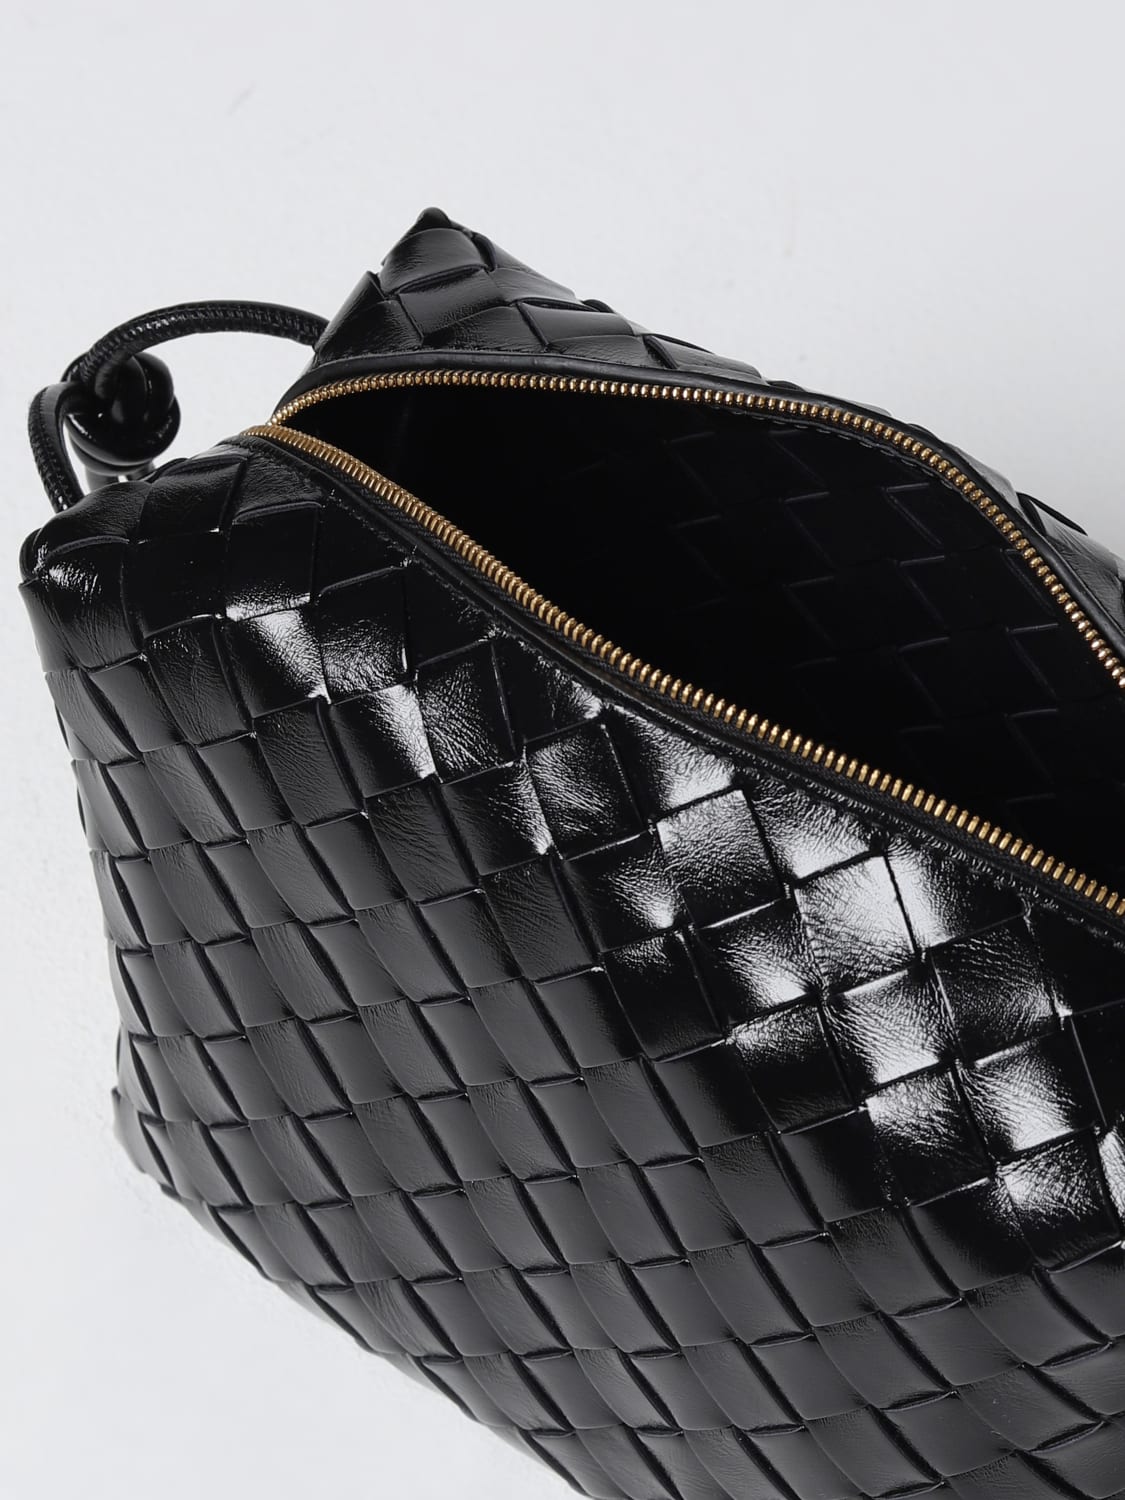 Loop Bottega Veneta Bag in Brushed Leather